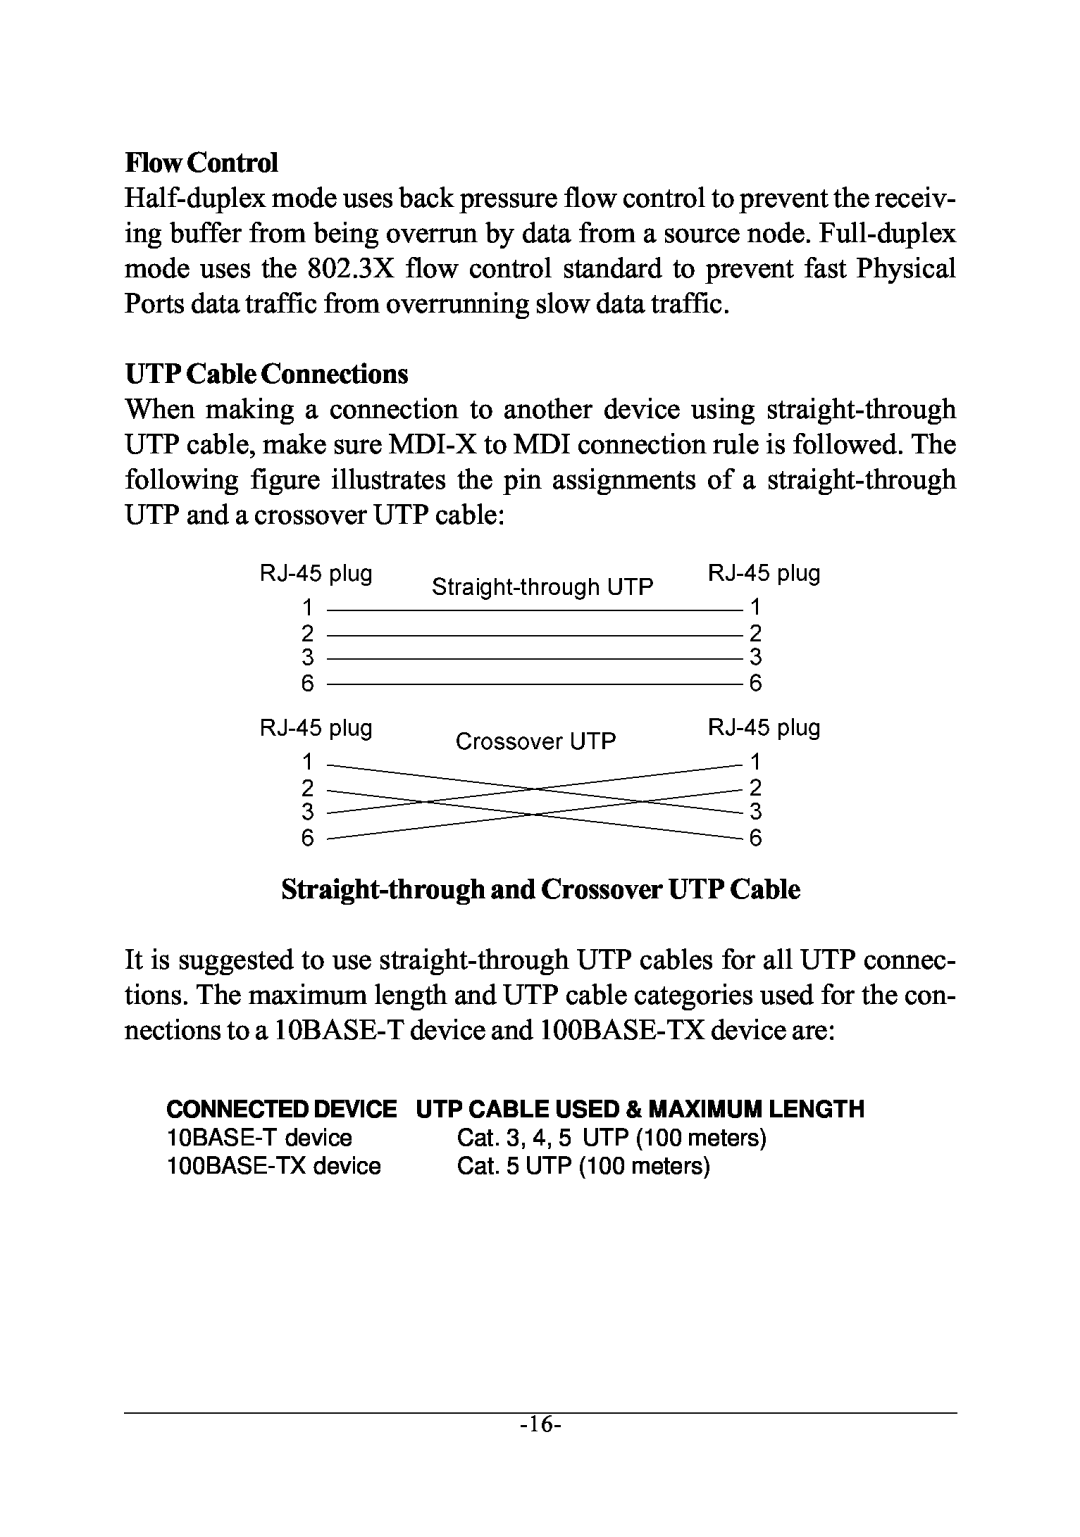 KTI Networks KS-801 manual Flow Control 